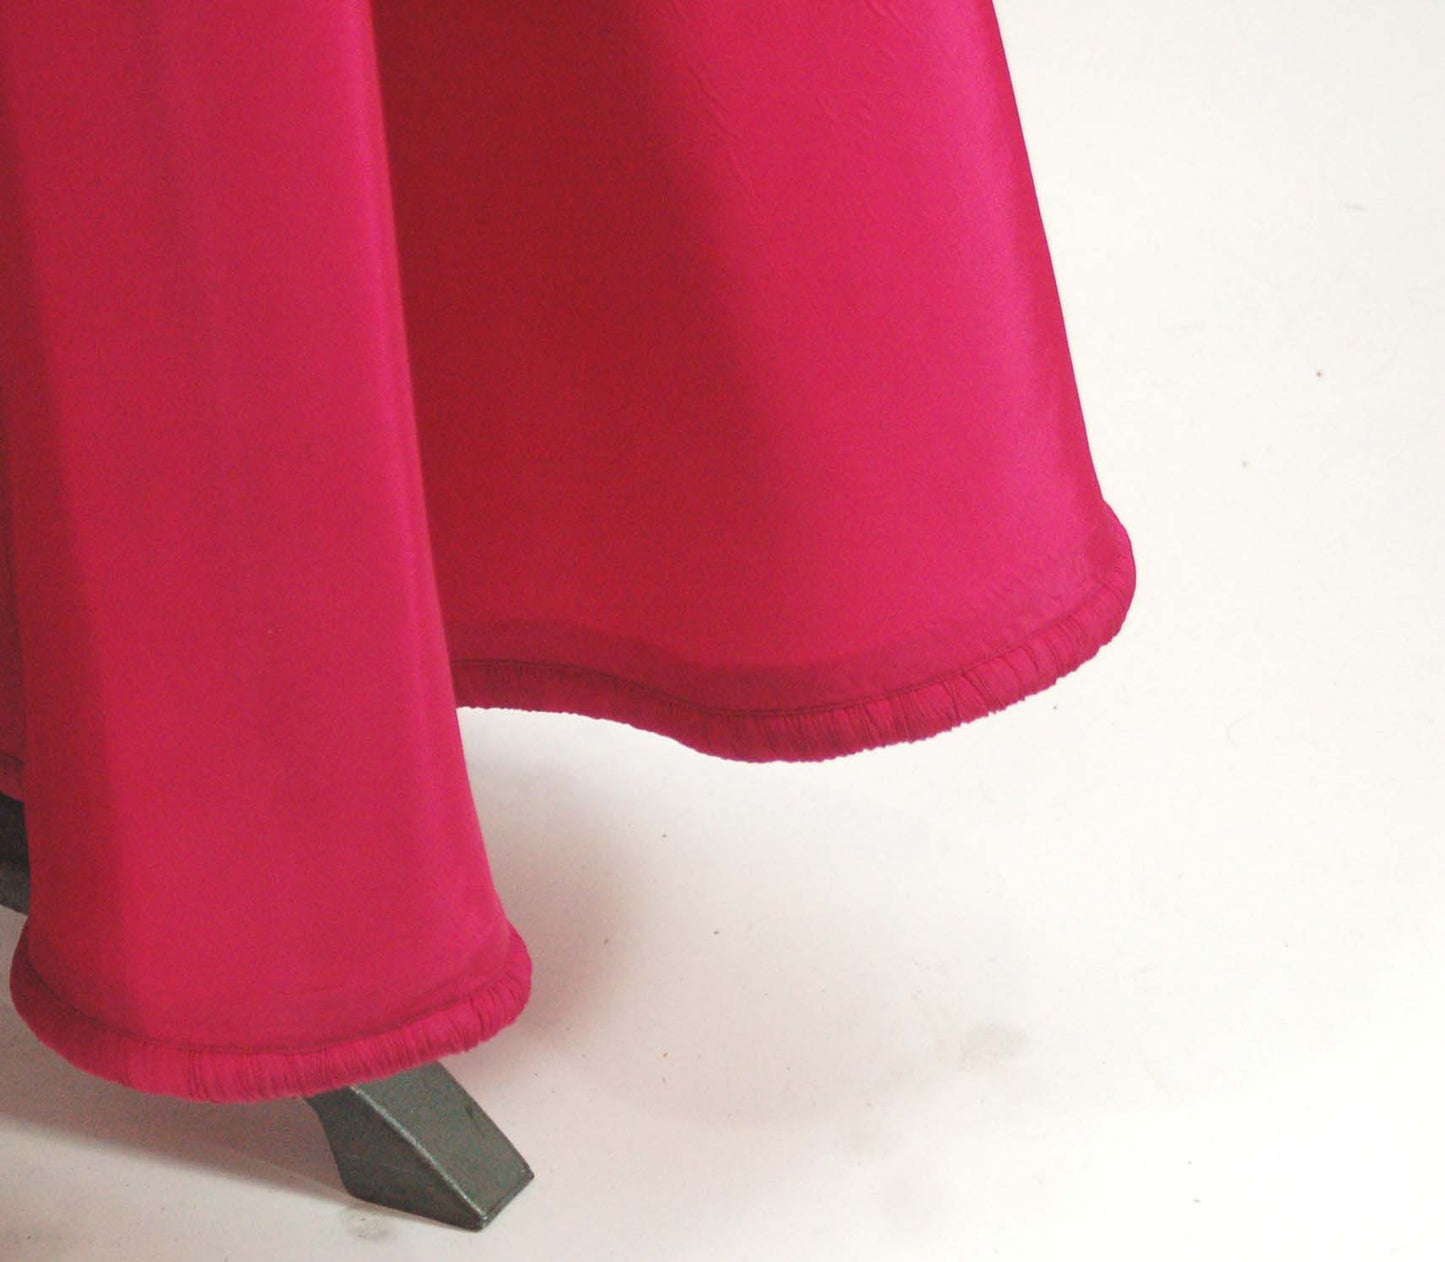 1940s gown bias cut fuchsia taffeta dress ruched bodice rhinestone trim Size S/M